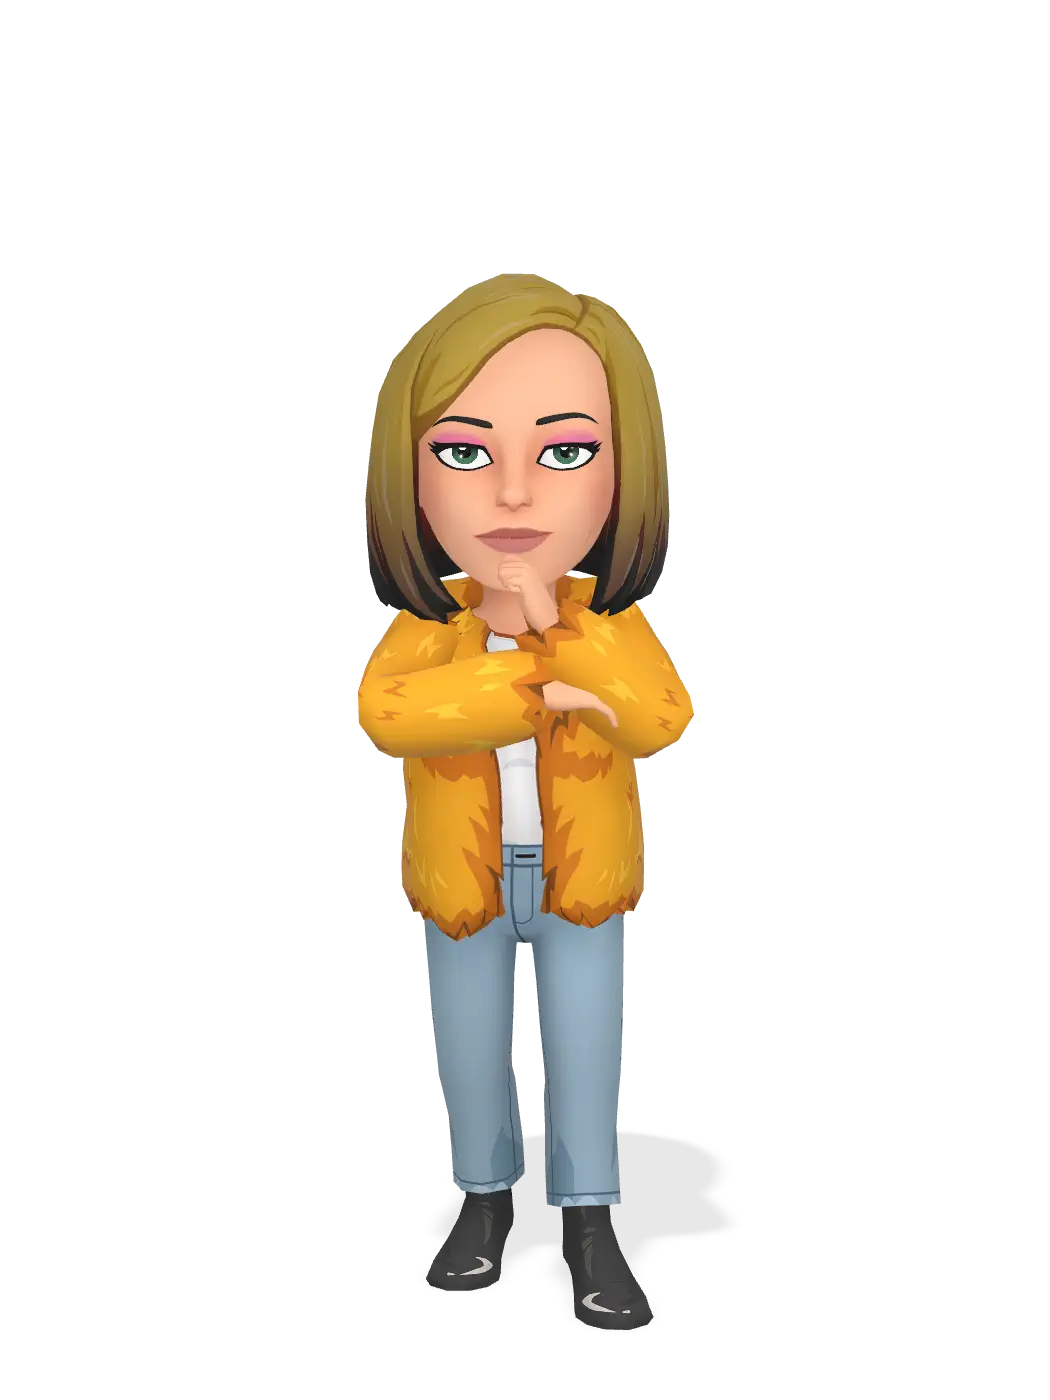 3D Bitmoji for hareidunghelse avatar